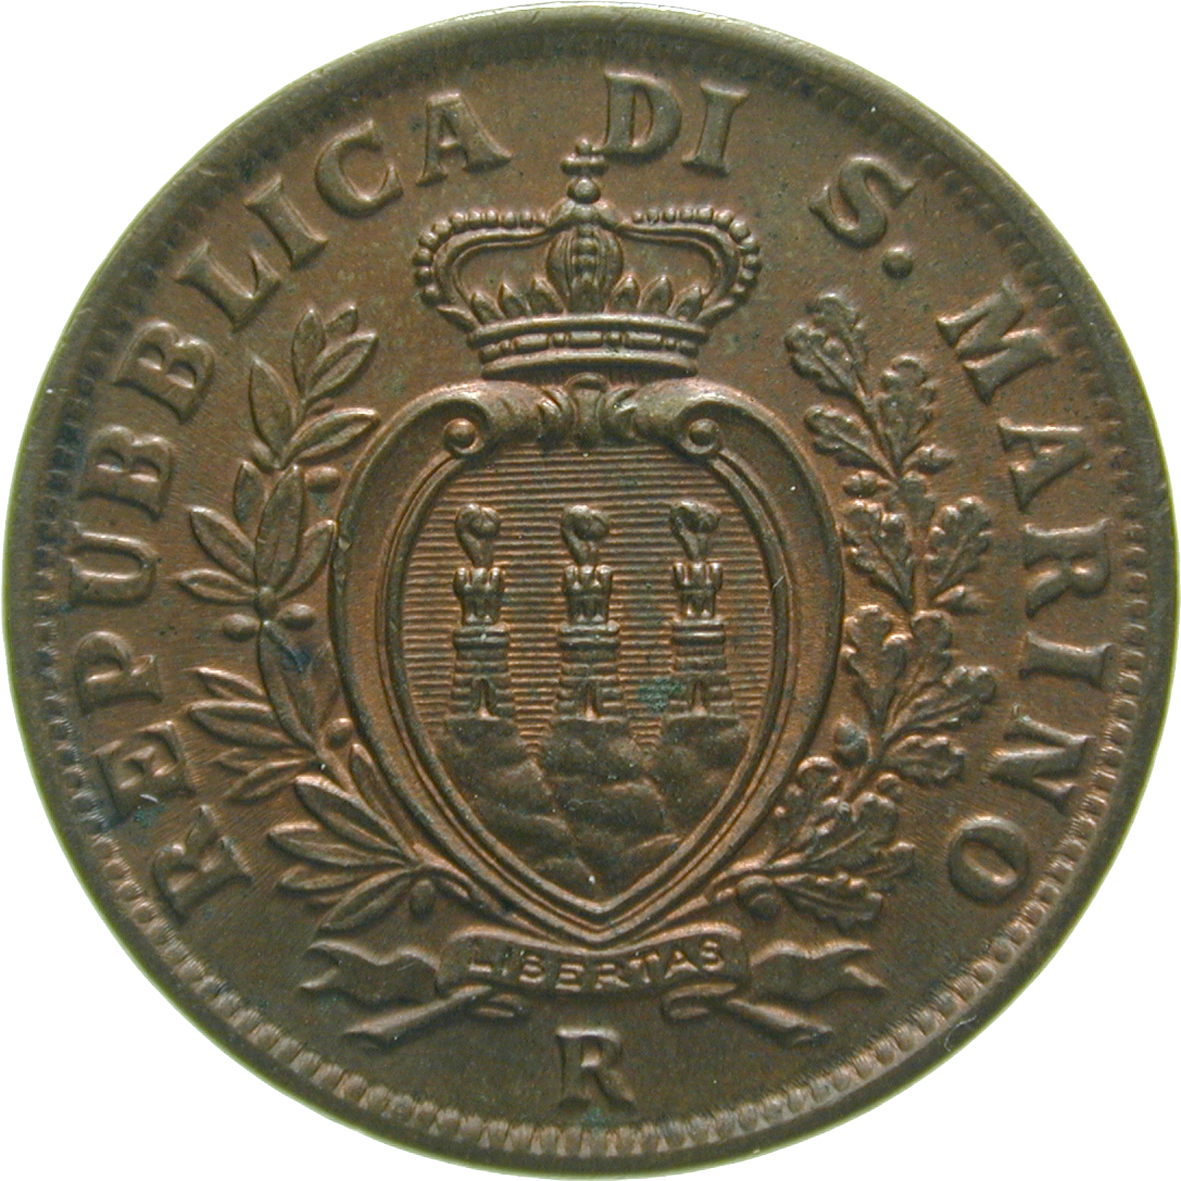 Republic of San Marino, 10 Centesimi 1935 (obverse)